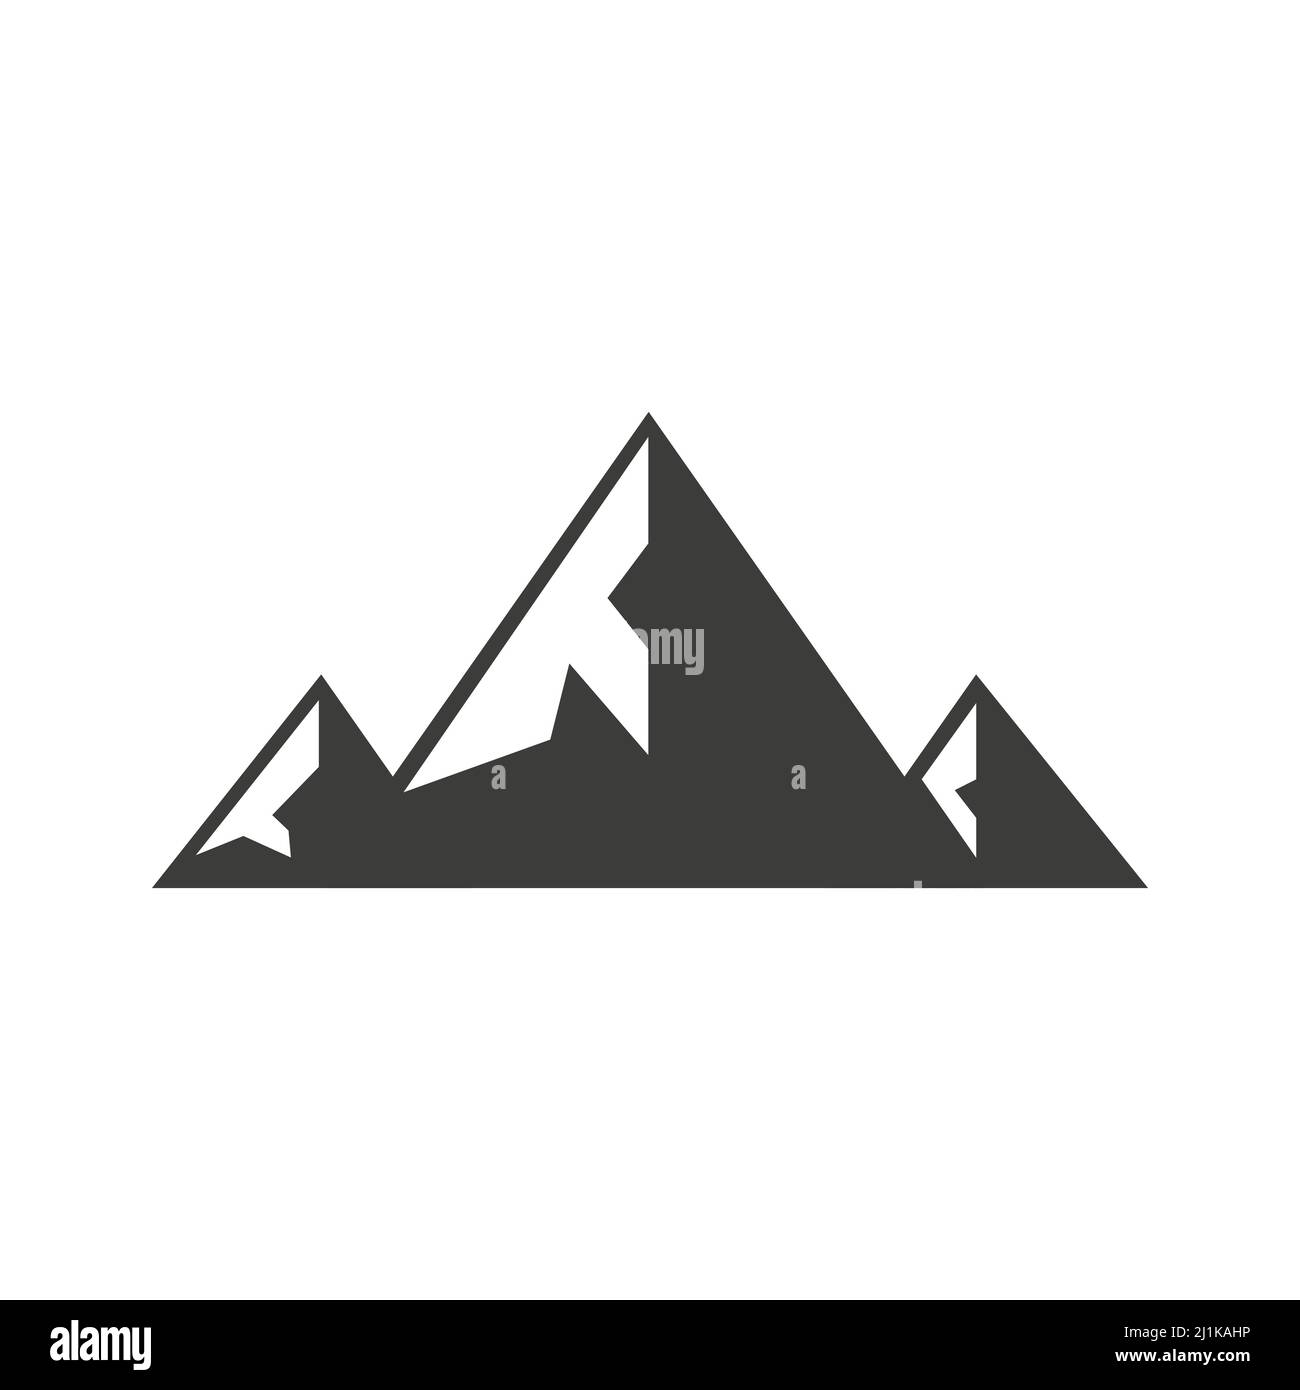 Mountain icon. Mountains black silhouette shapes. Stock Vector